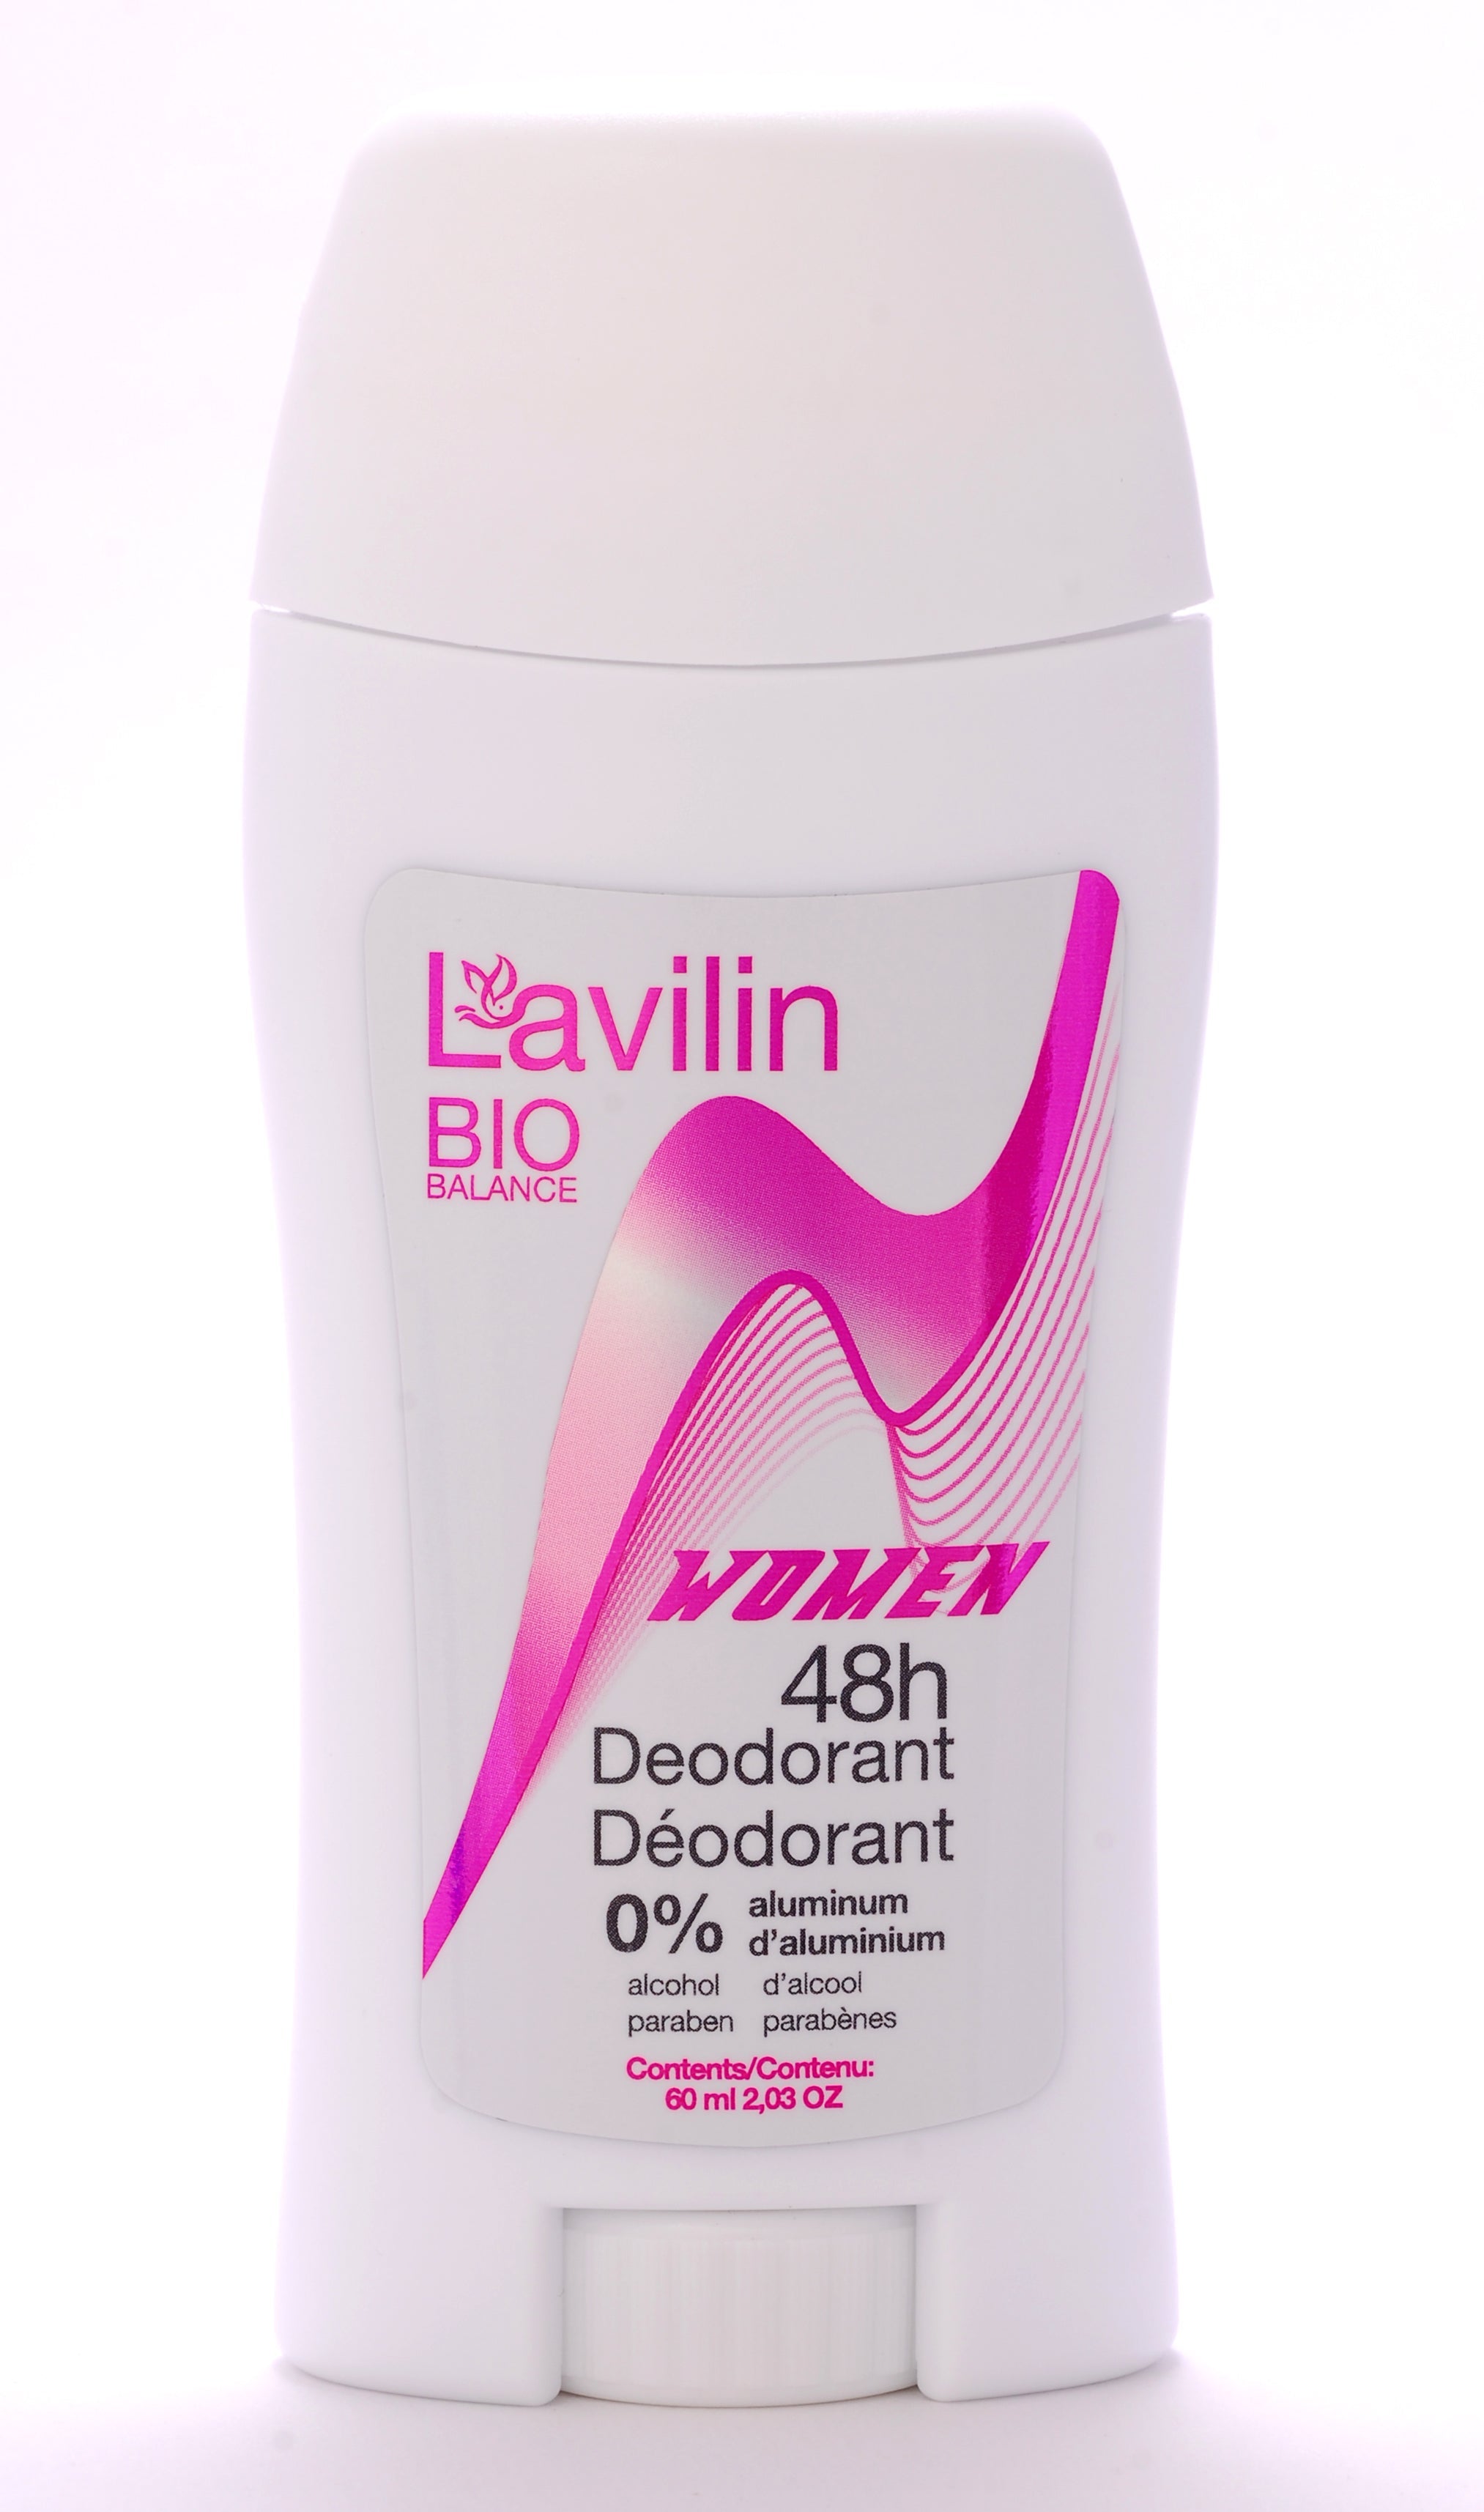 Deodorant Women 48h stick (s-aluminum, s-alcohol, s-parabens for women) 60ml